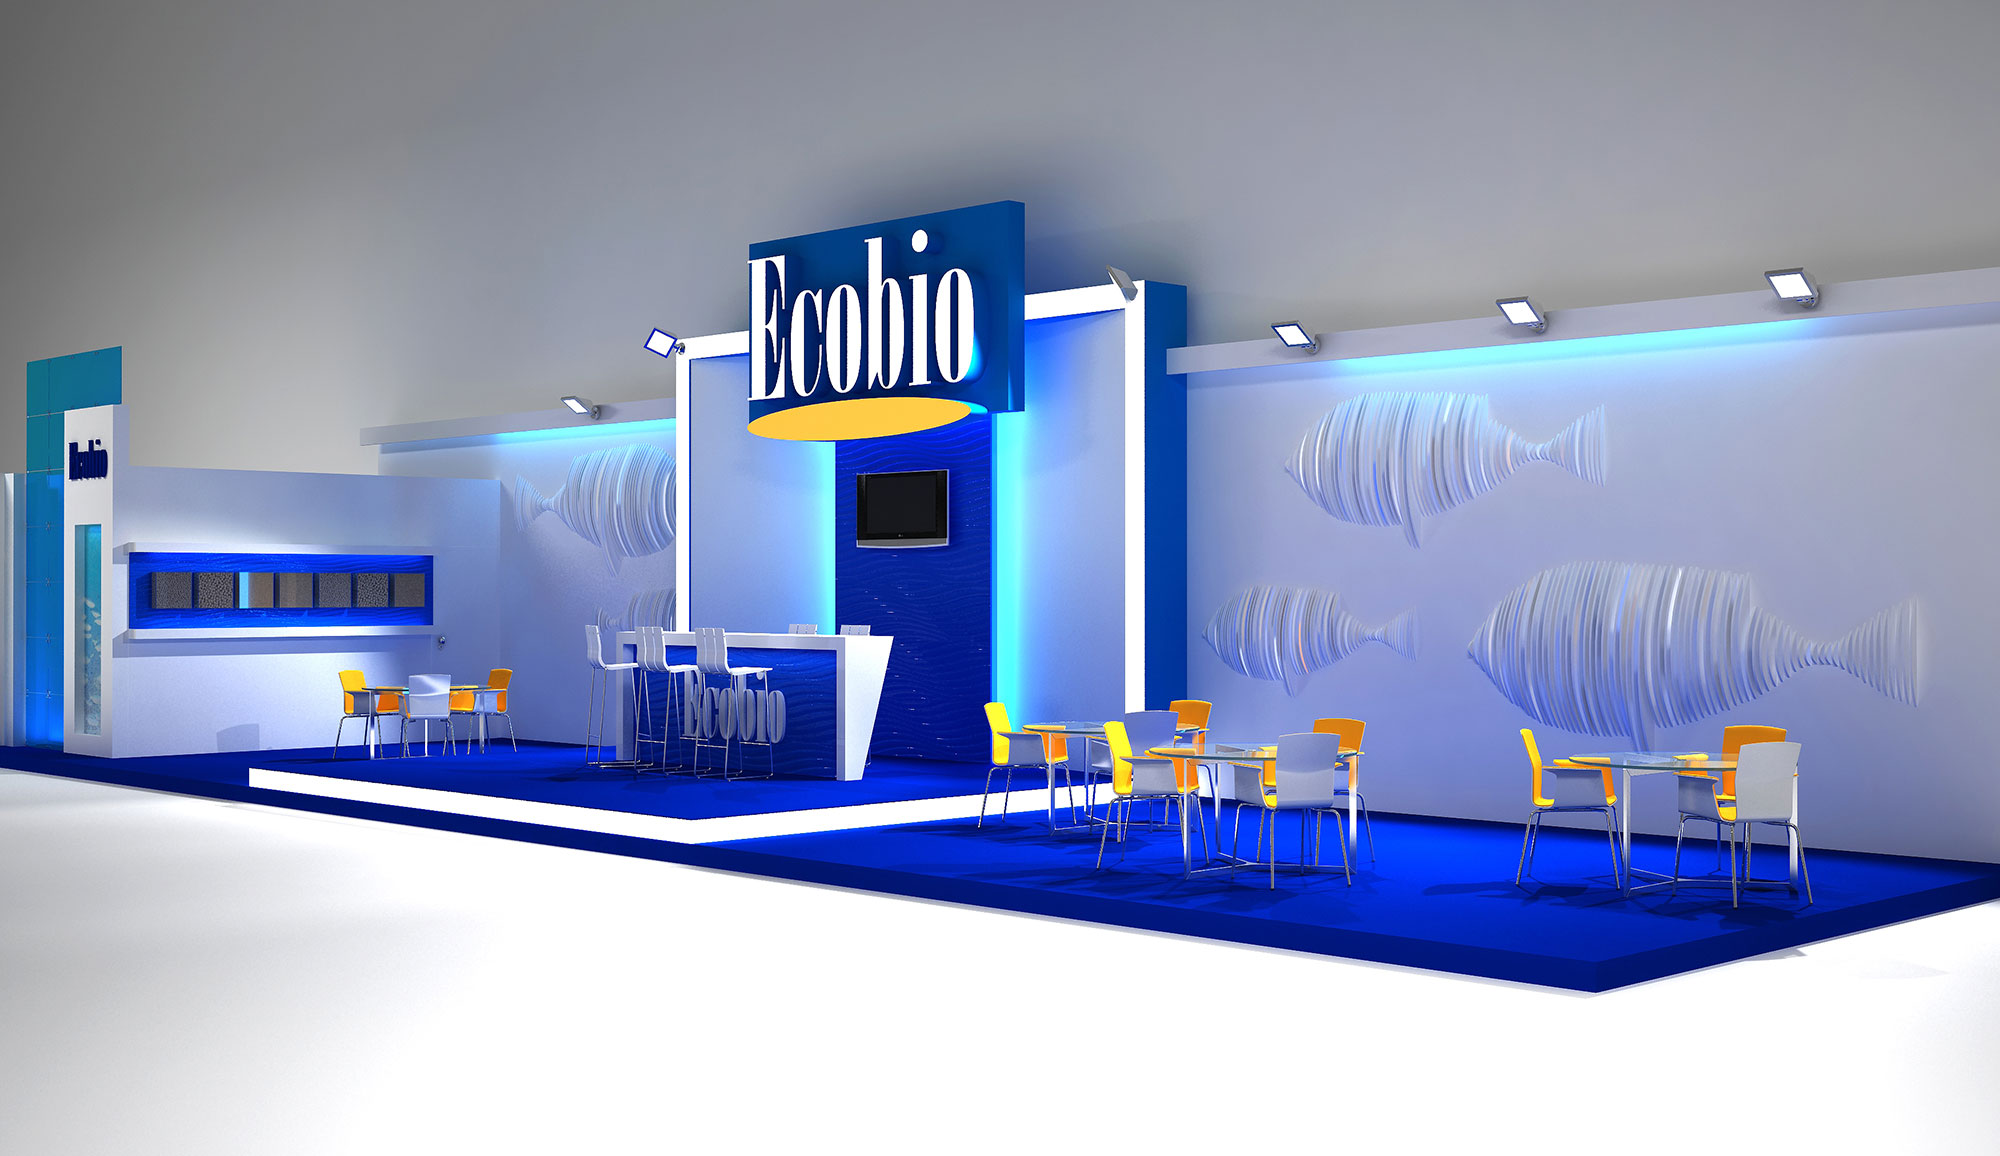 Ecobio Exhibition Stand - KONSEPTIZ Advertising Agency in Turkey